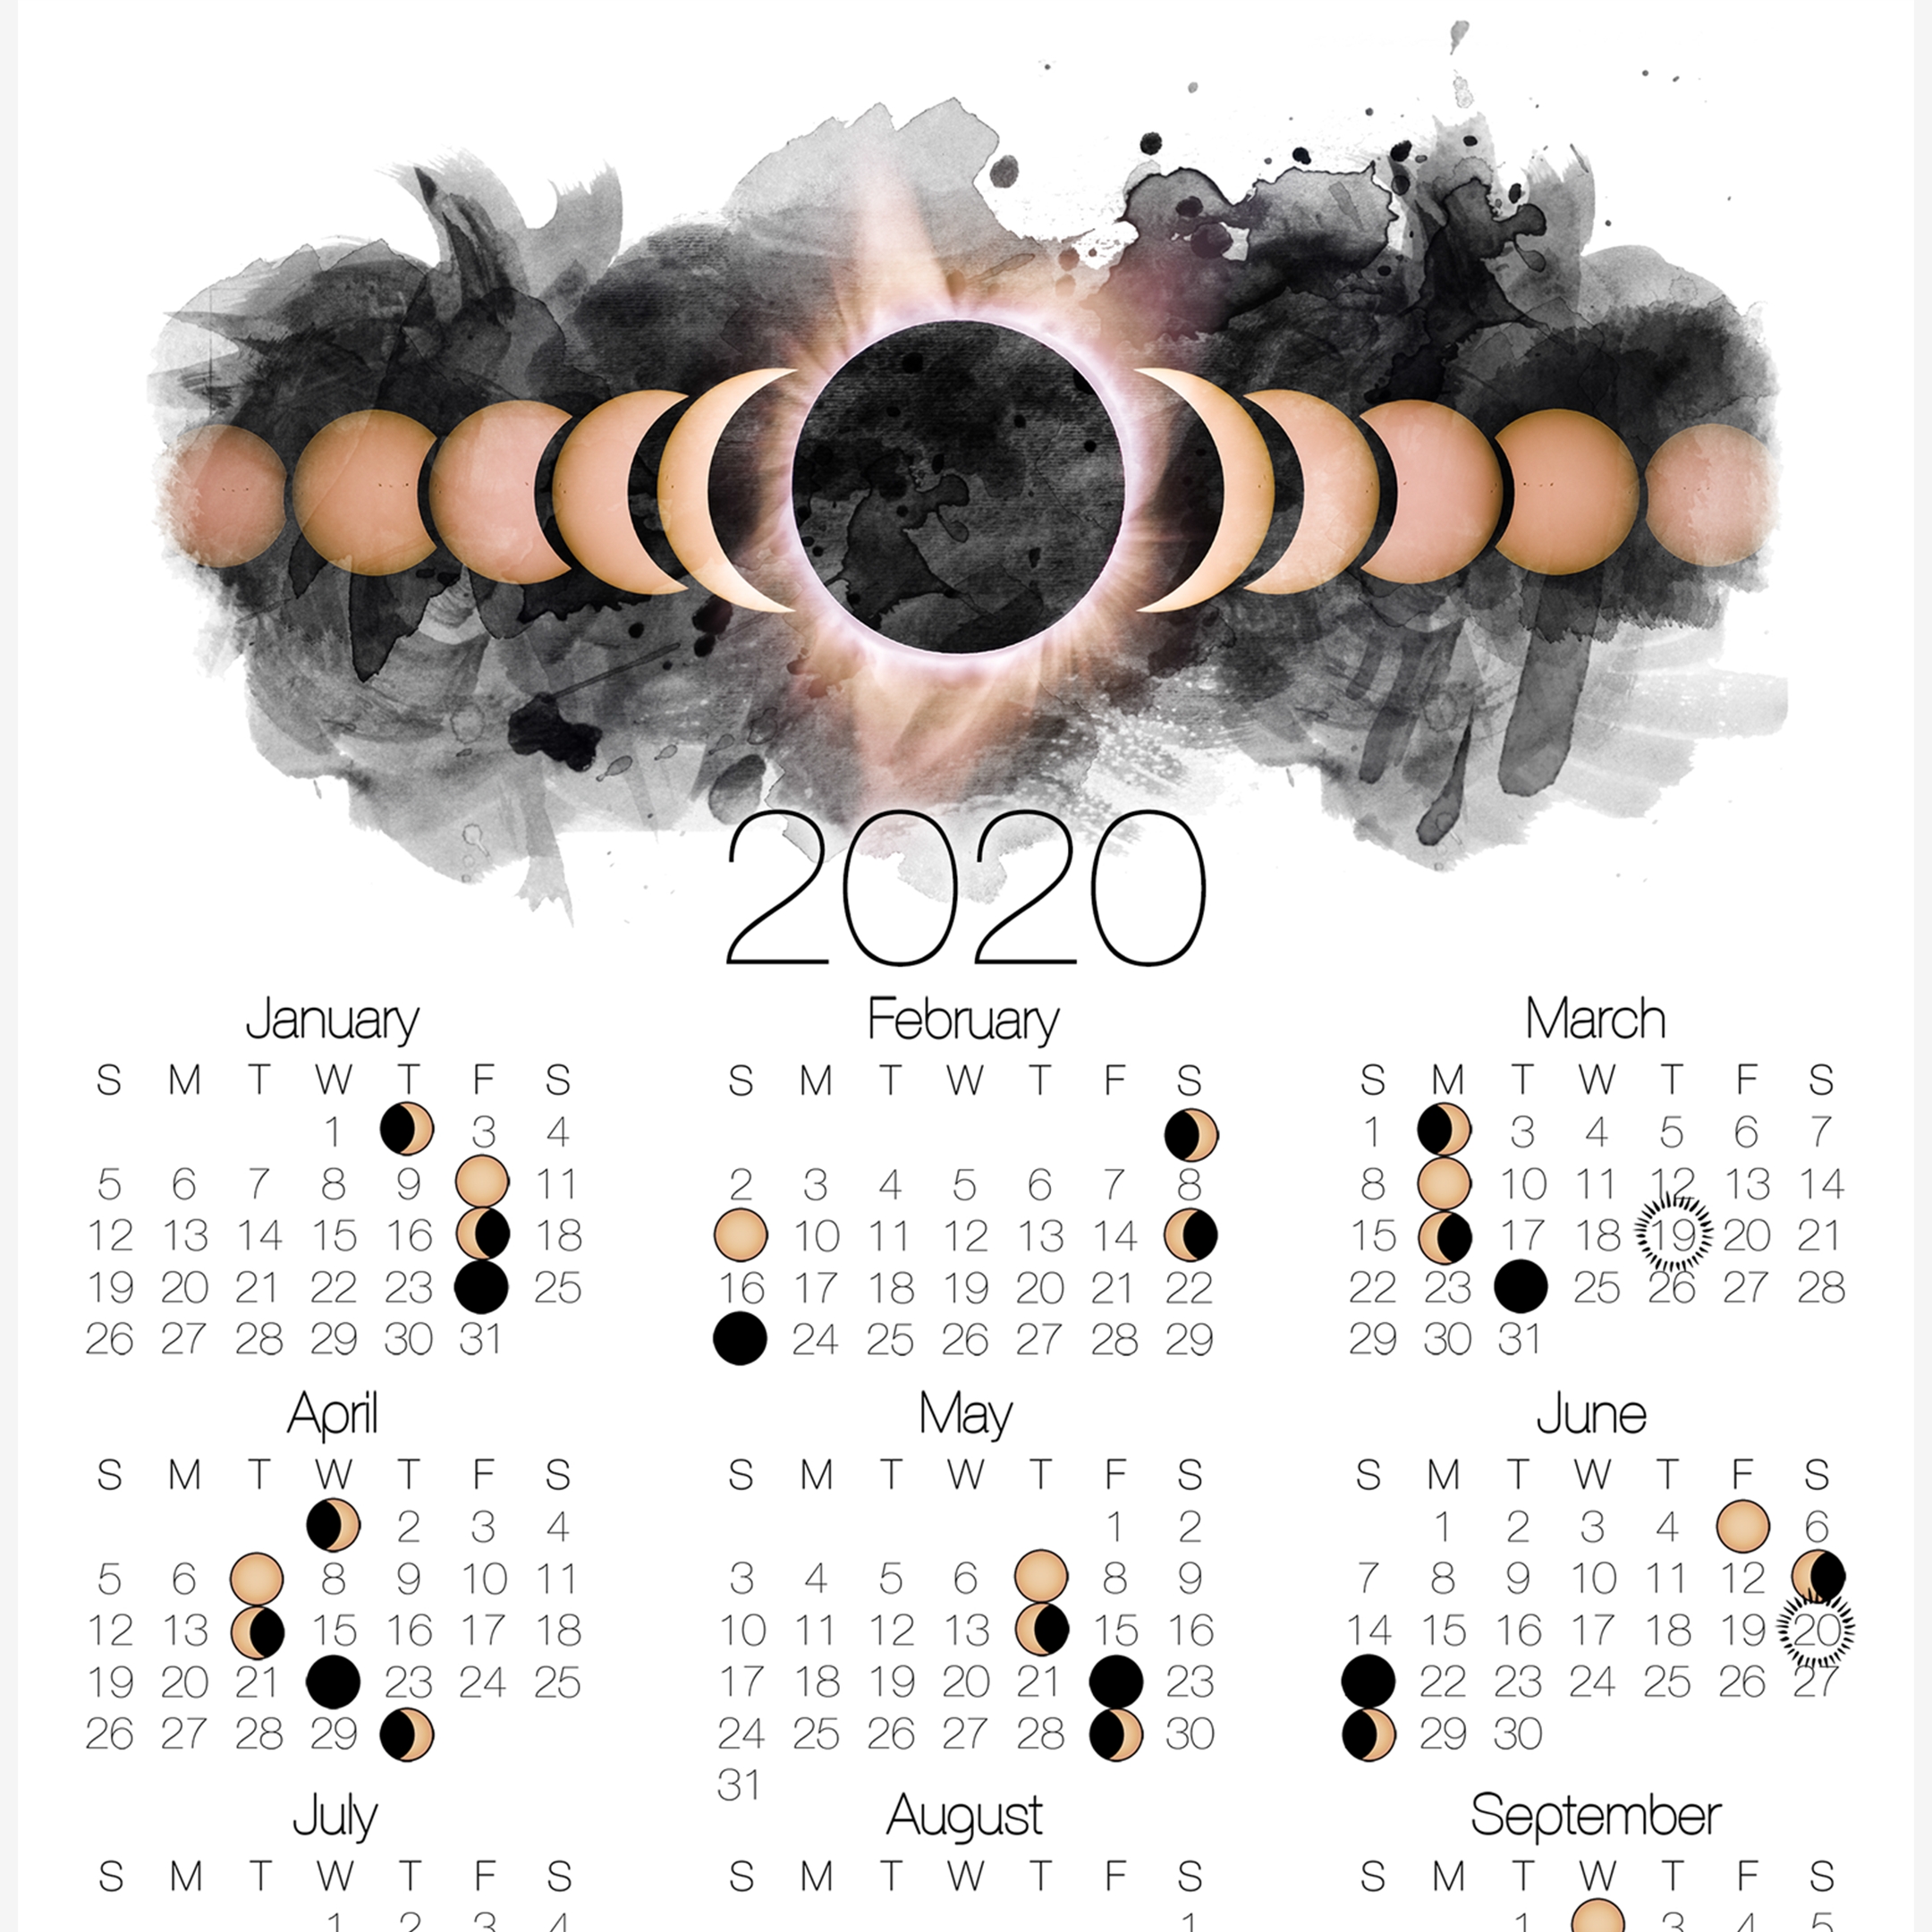 2020 Moon Phase Calendar Lunar Calendar With Solar Eclipse Moon Calendar In Zodiac